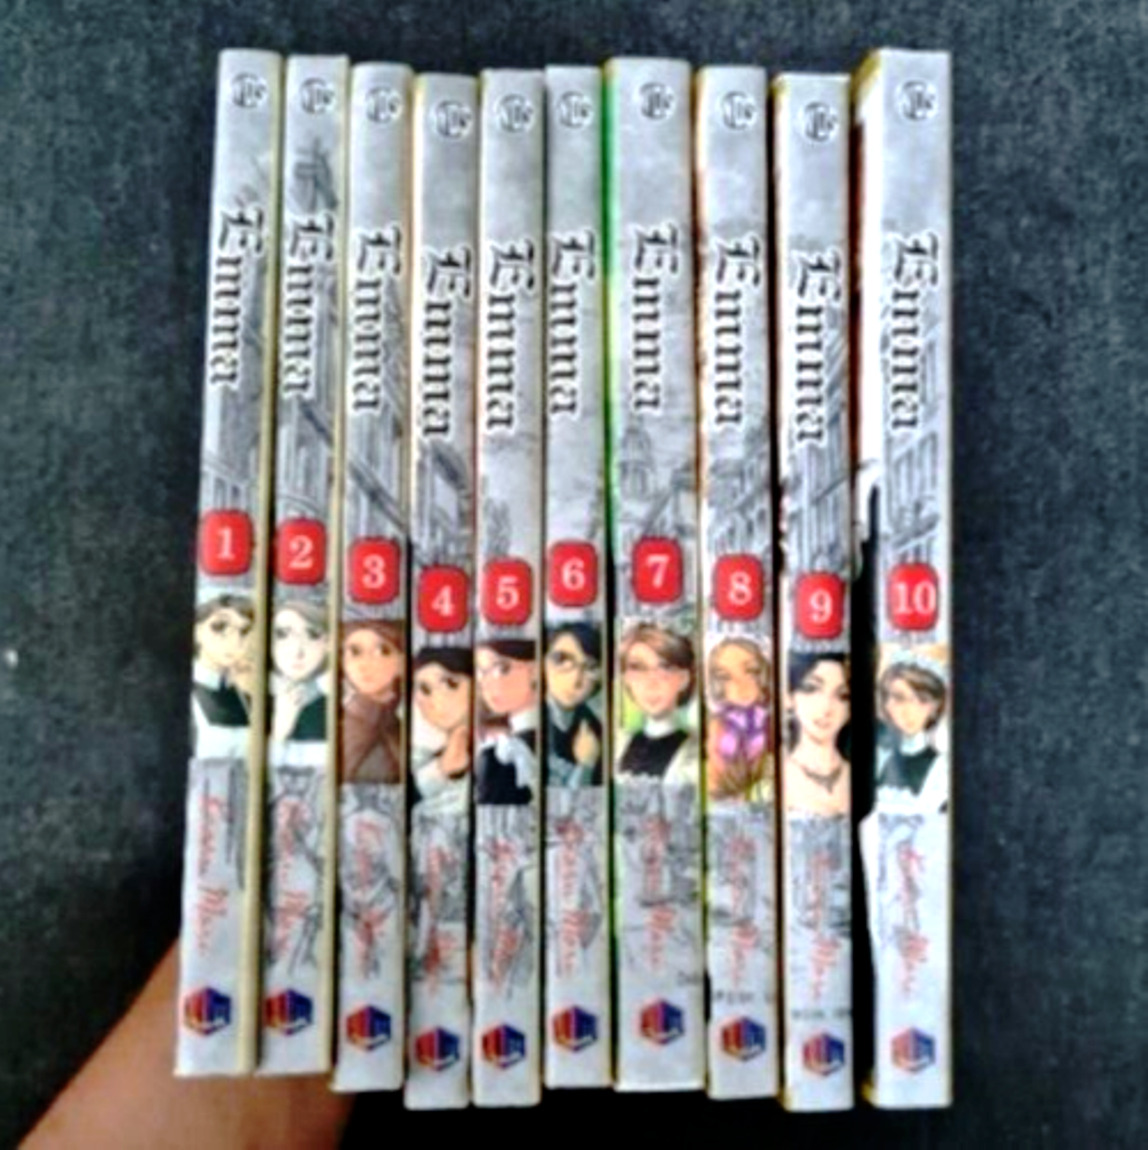 EMMA By Kaoru Mori Manga Volumes 1-10 END English Version EXPRESS SHIP